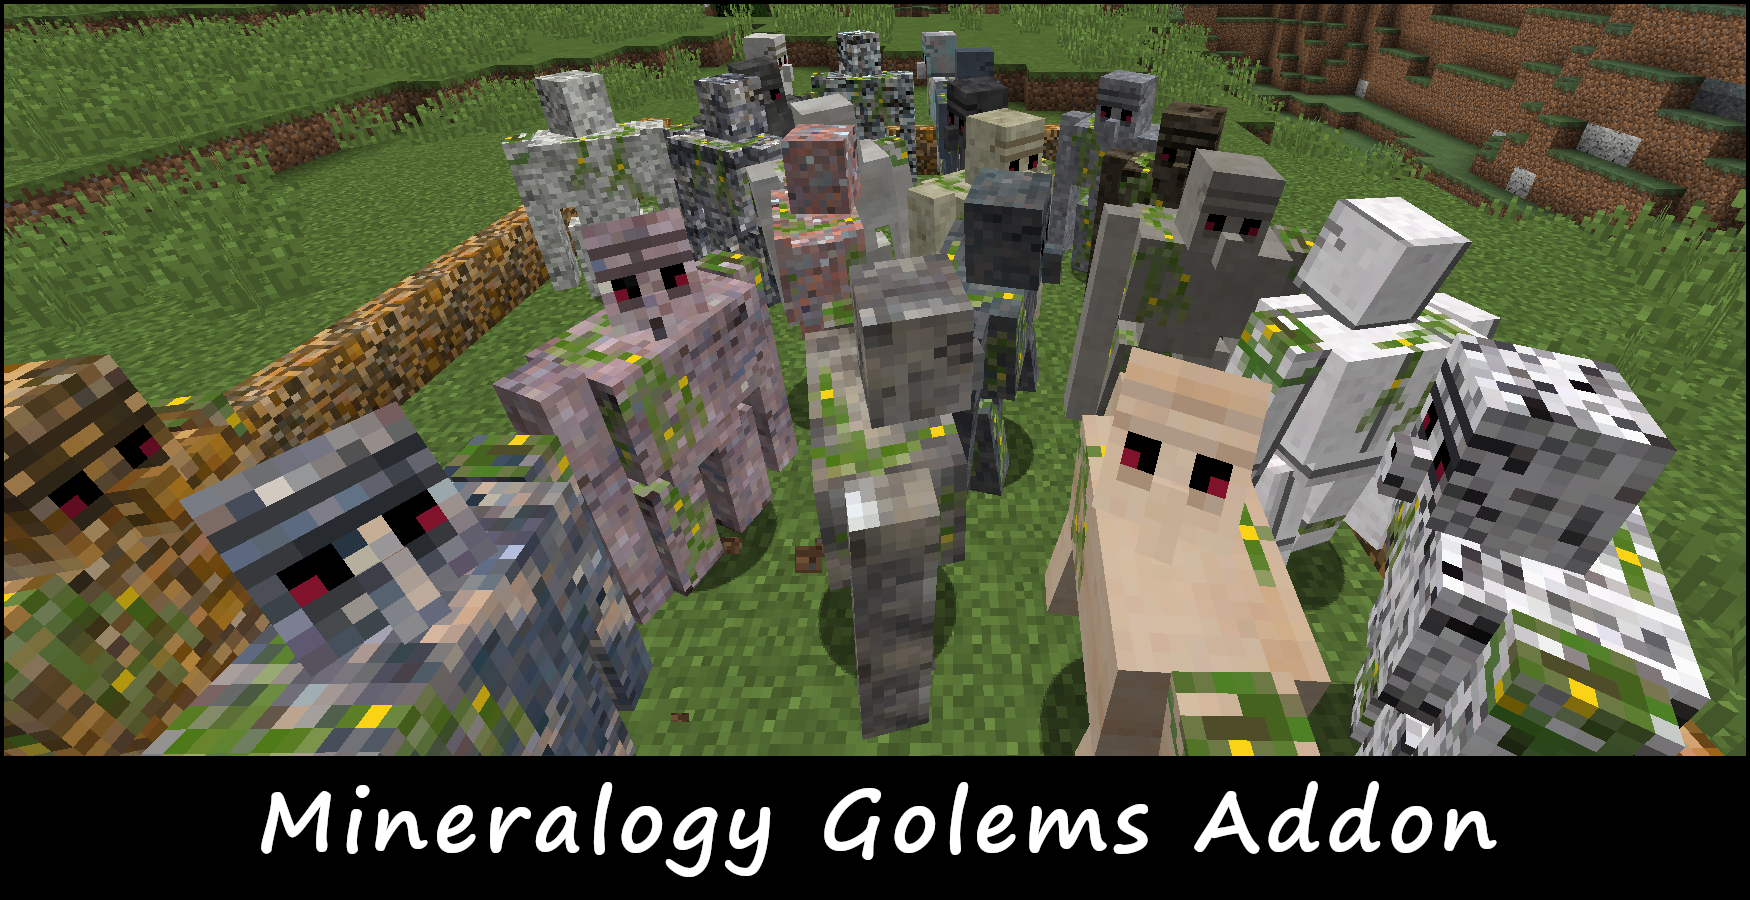 Mineralogy Golems